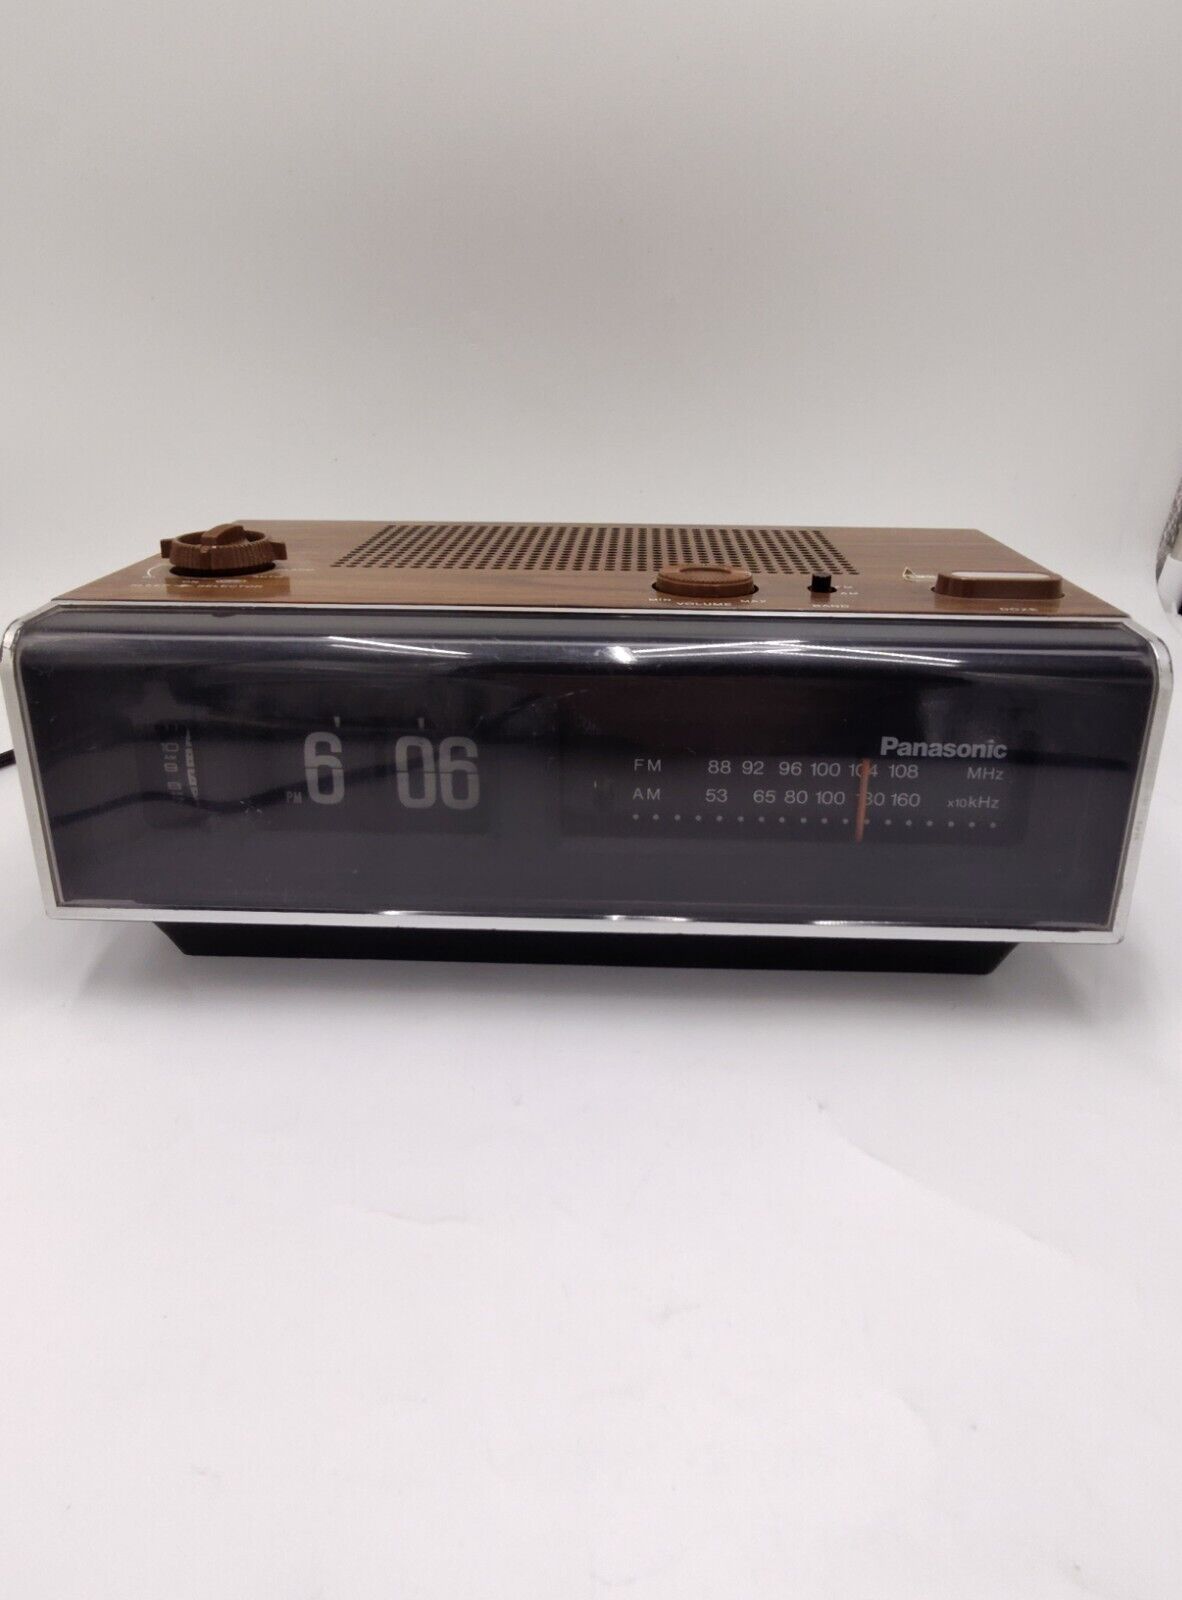 Vintage Panasonic RC-6040 Flip Clock AM FM Radio Groundhog Day Working